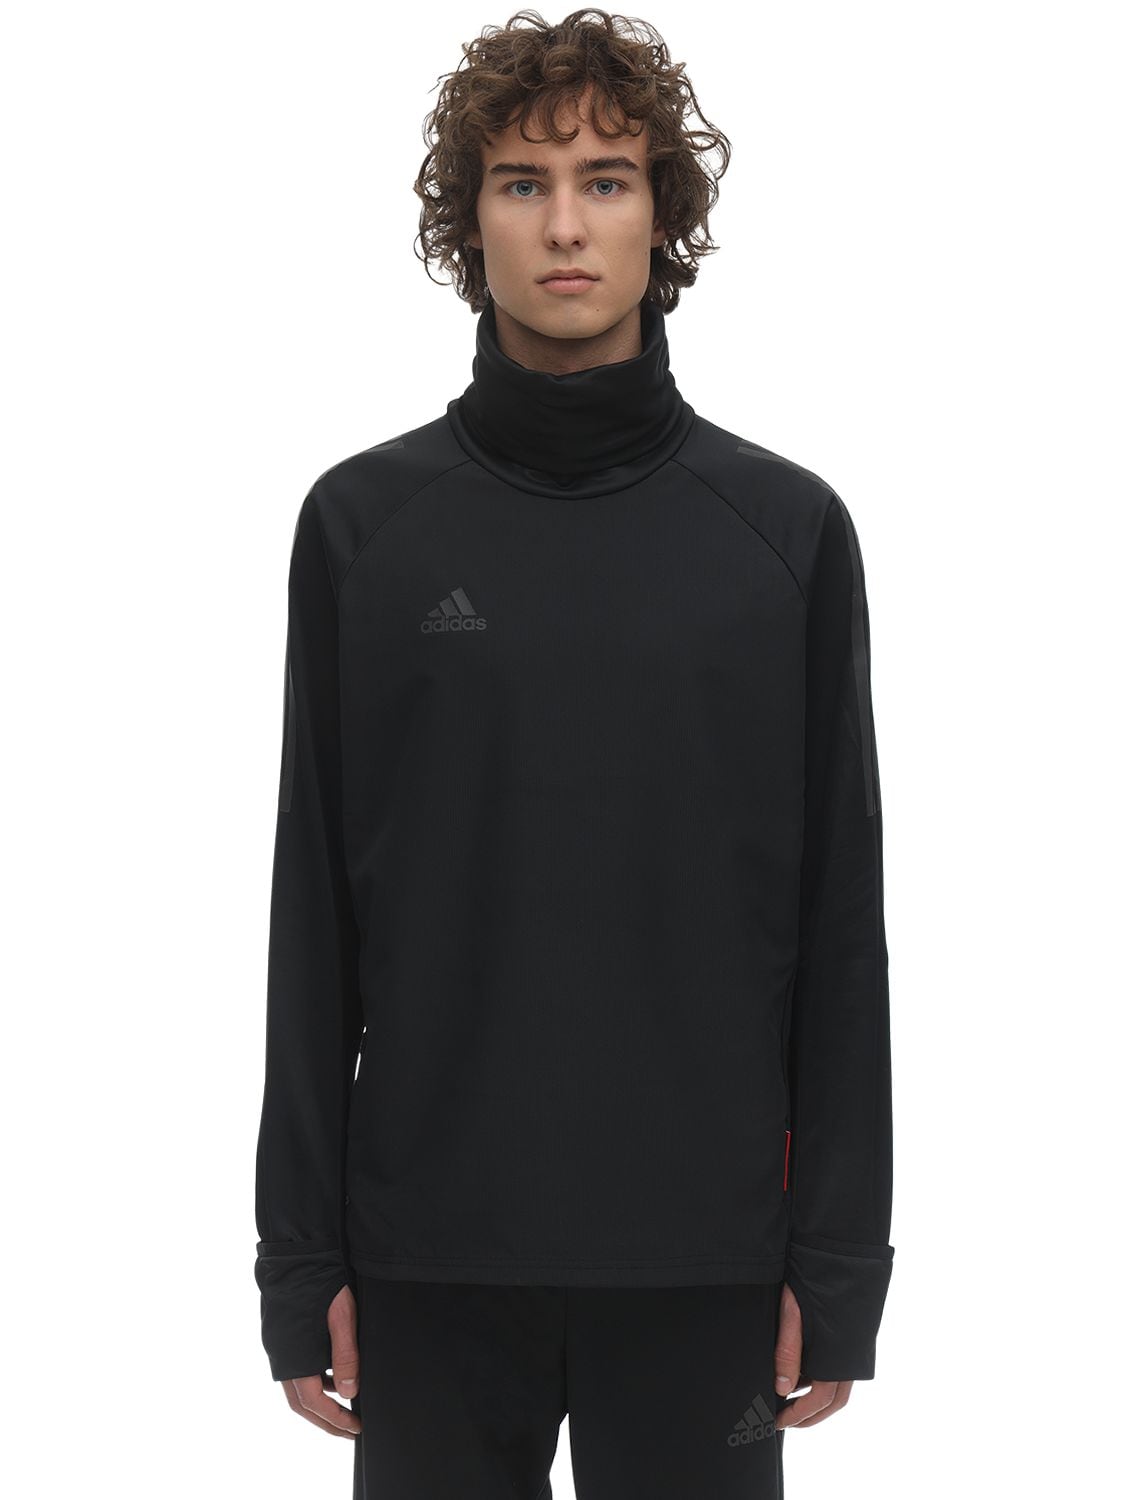 Adidas Football 长袖科技织物保暖上衣 In Black